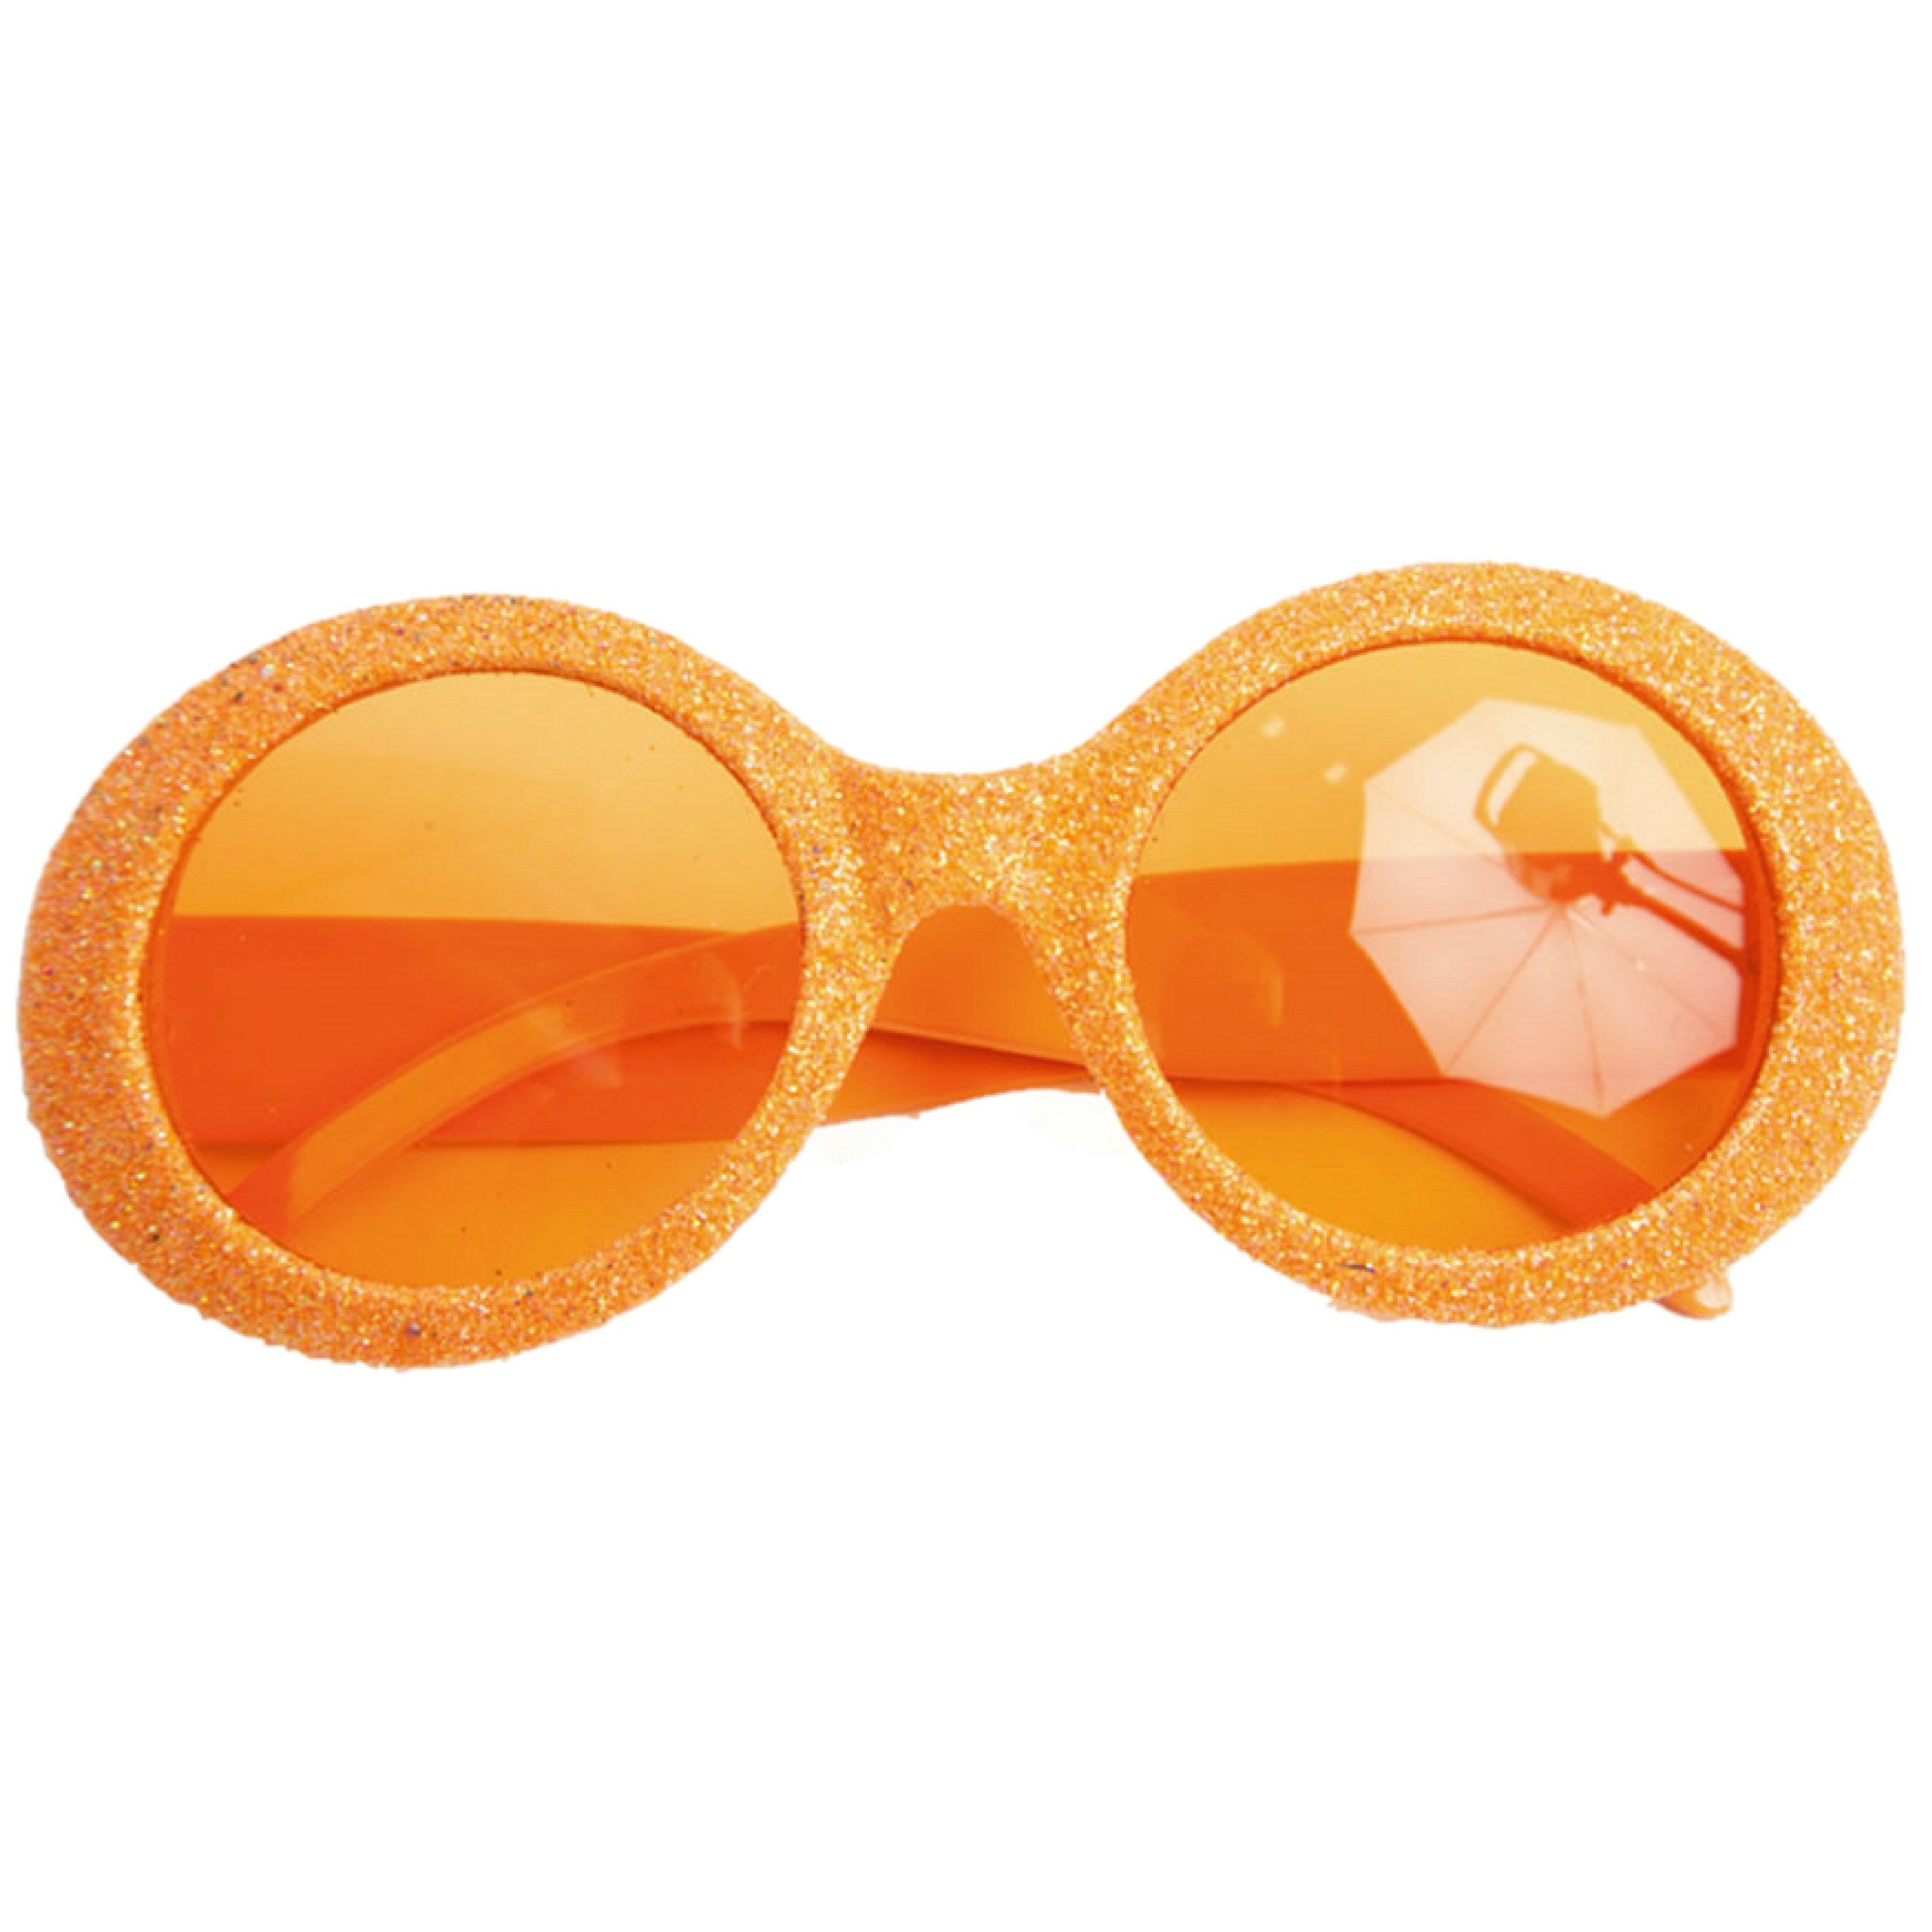 Oranje disco dames party bril met glitters